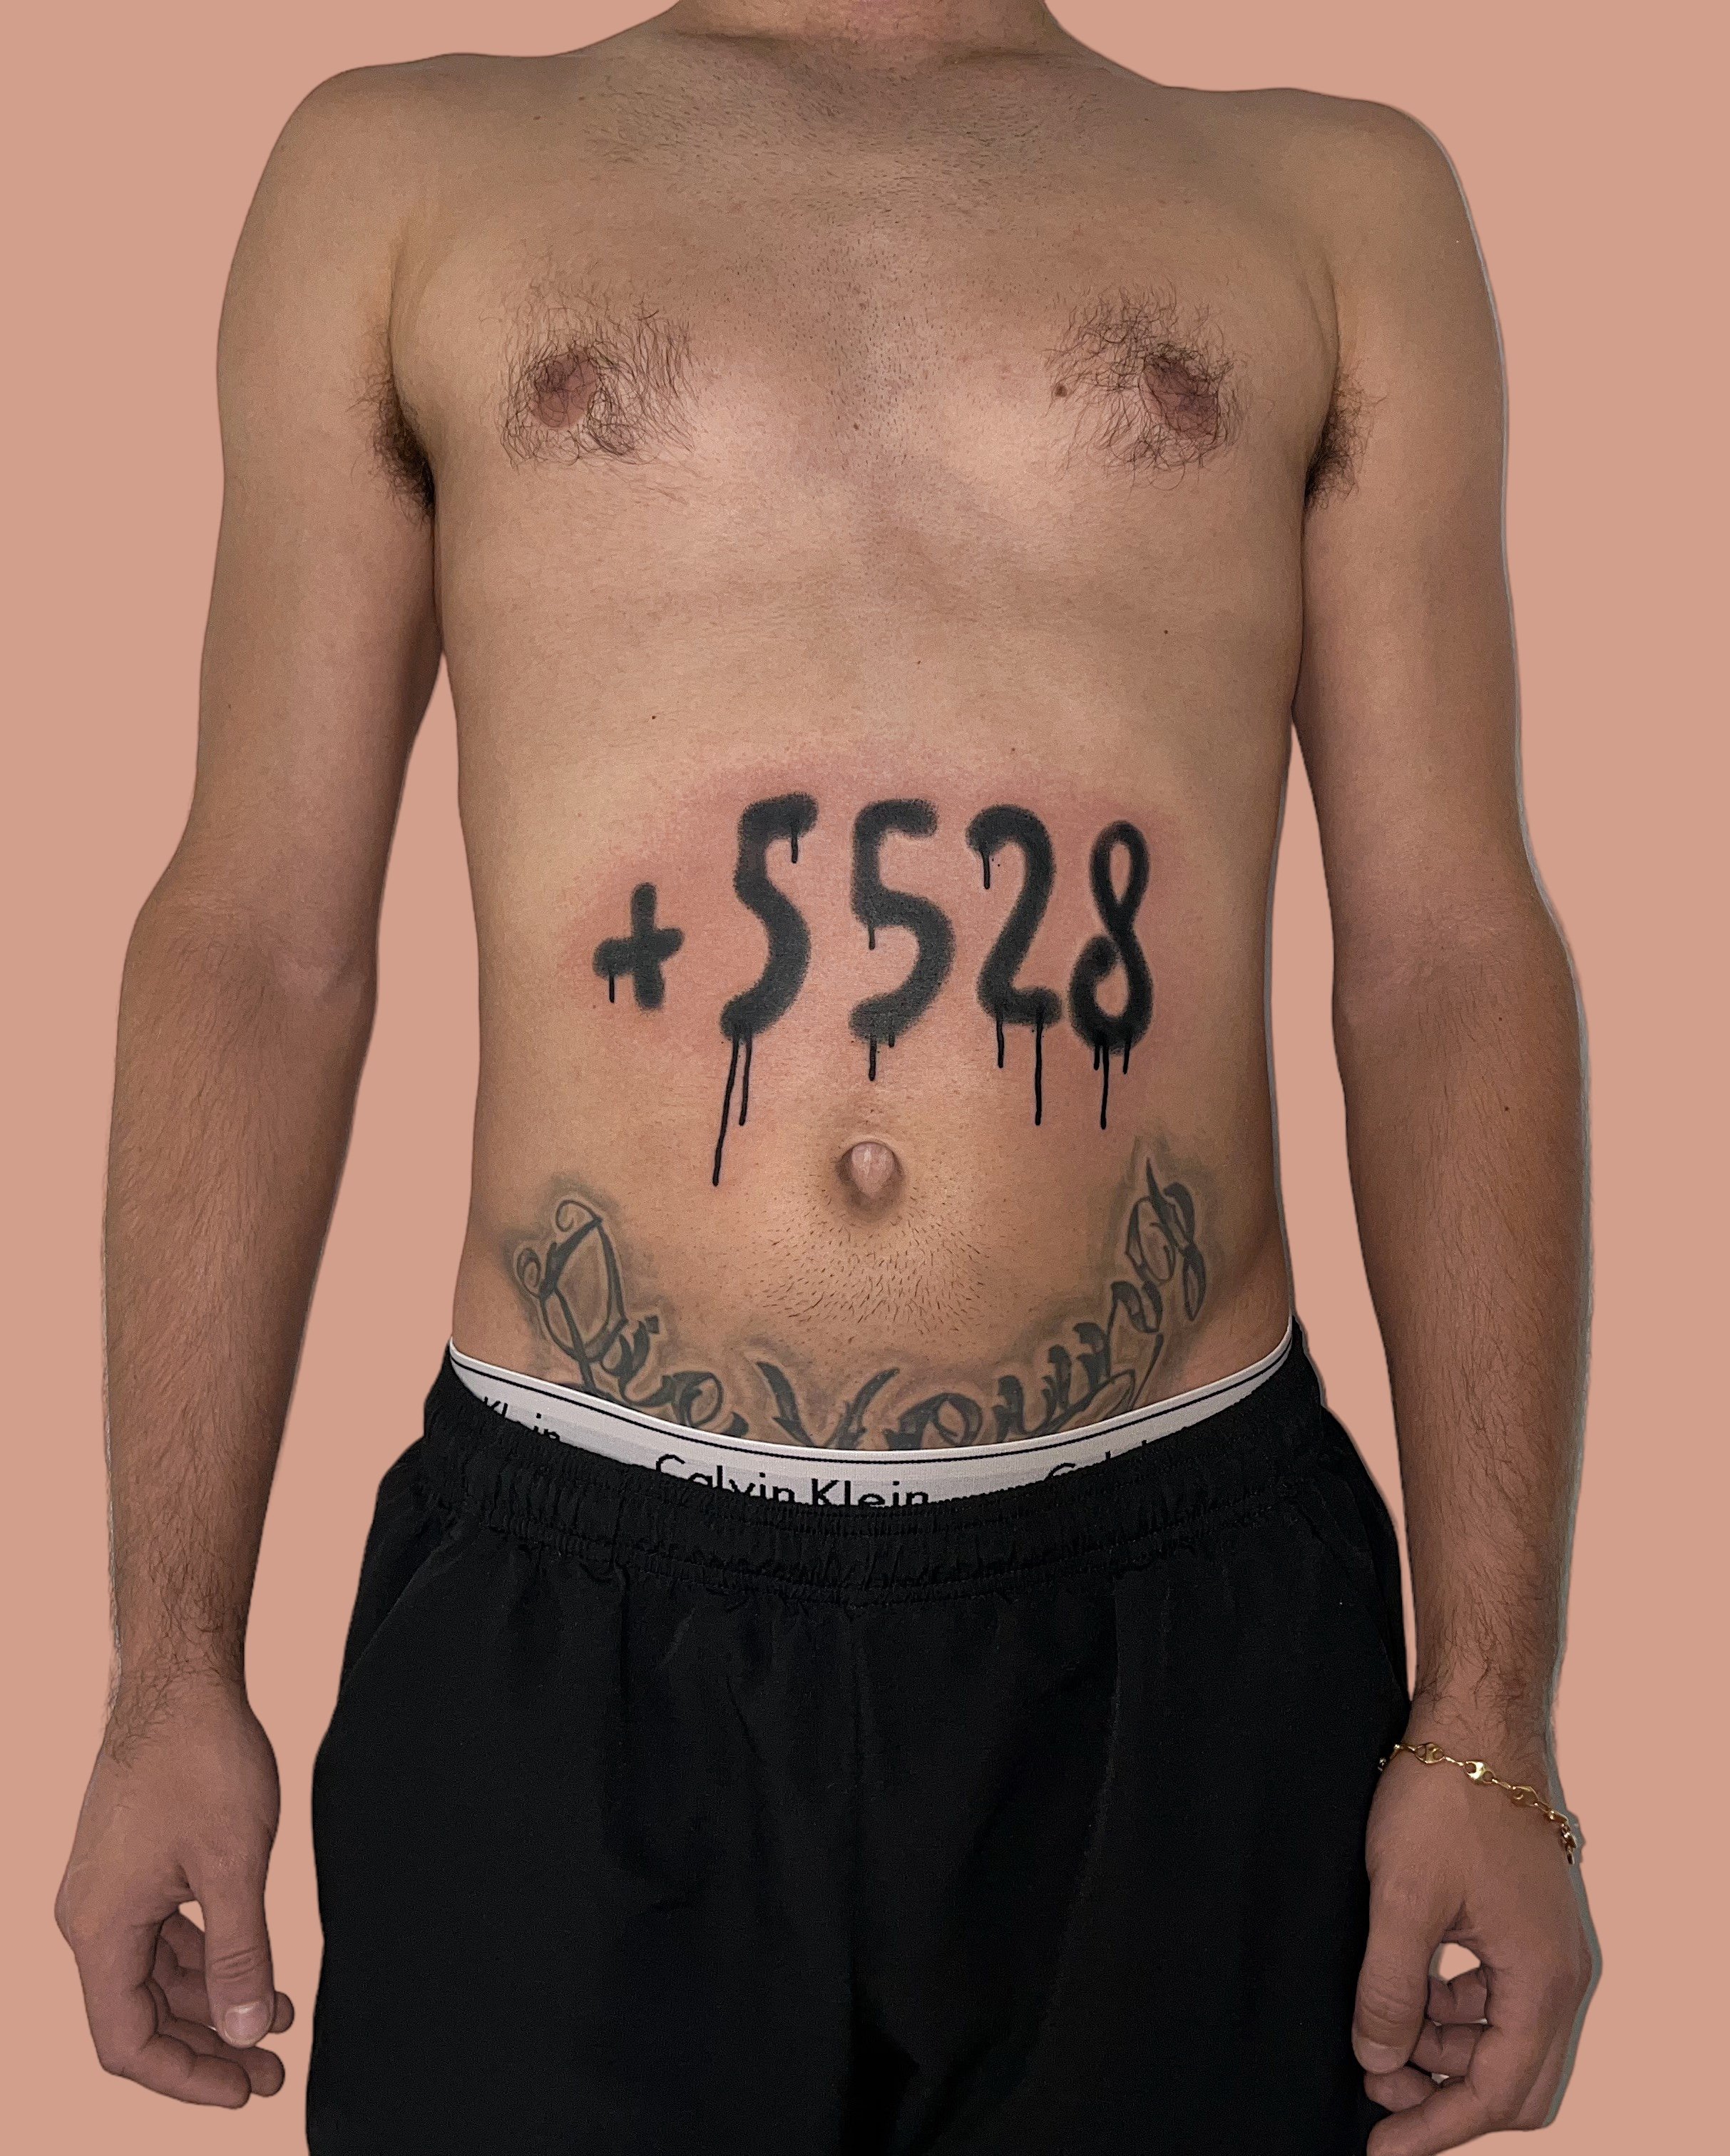 Graphiti like number tattooed on belly by Vitya lyuty.JPG